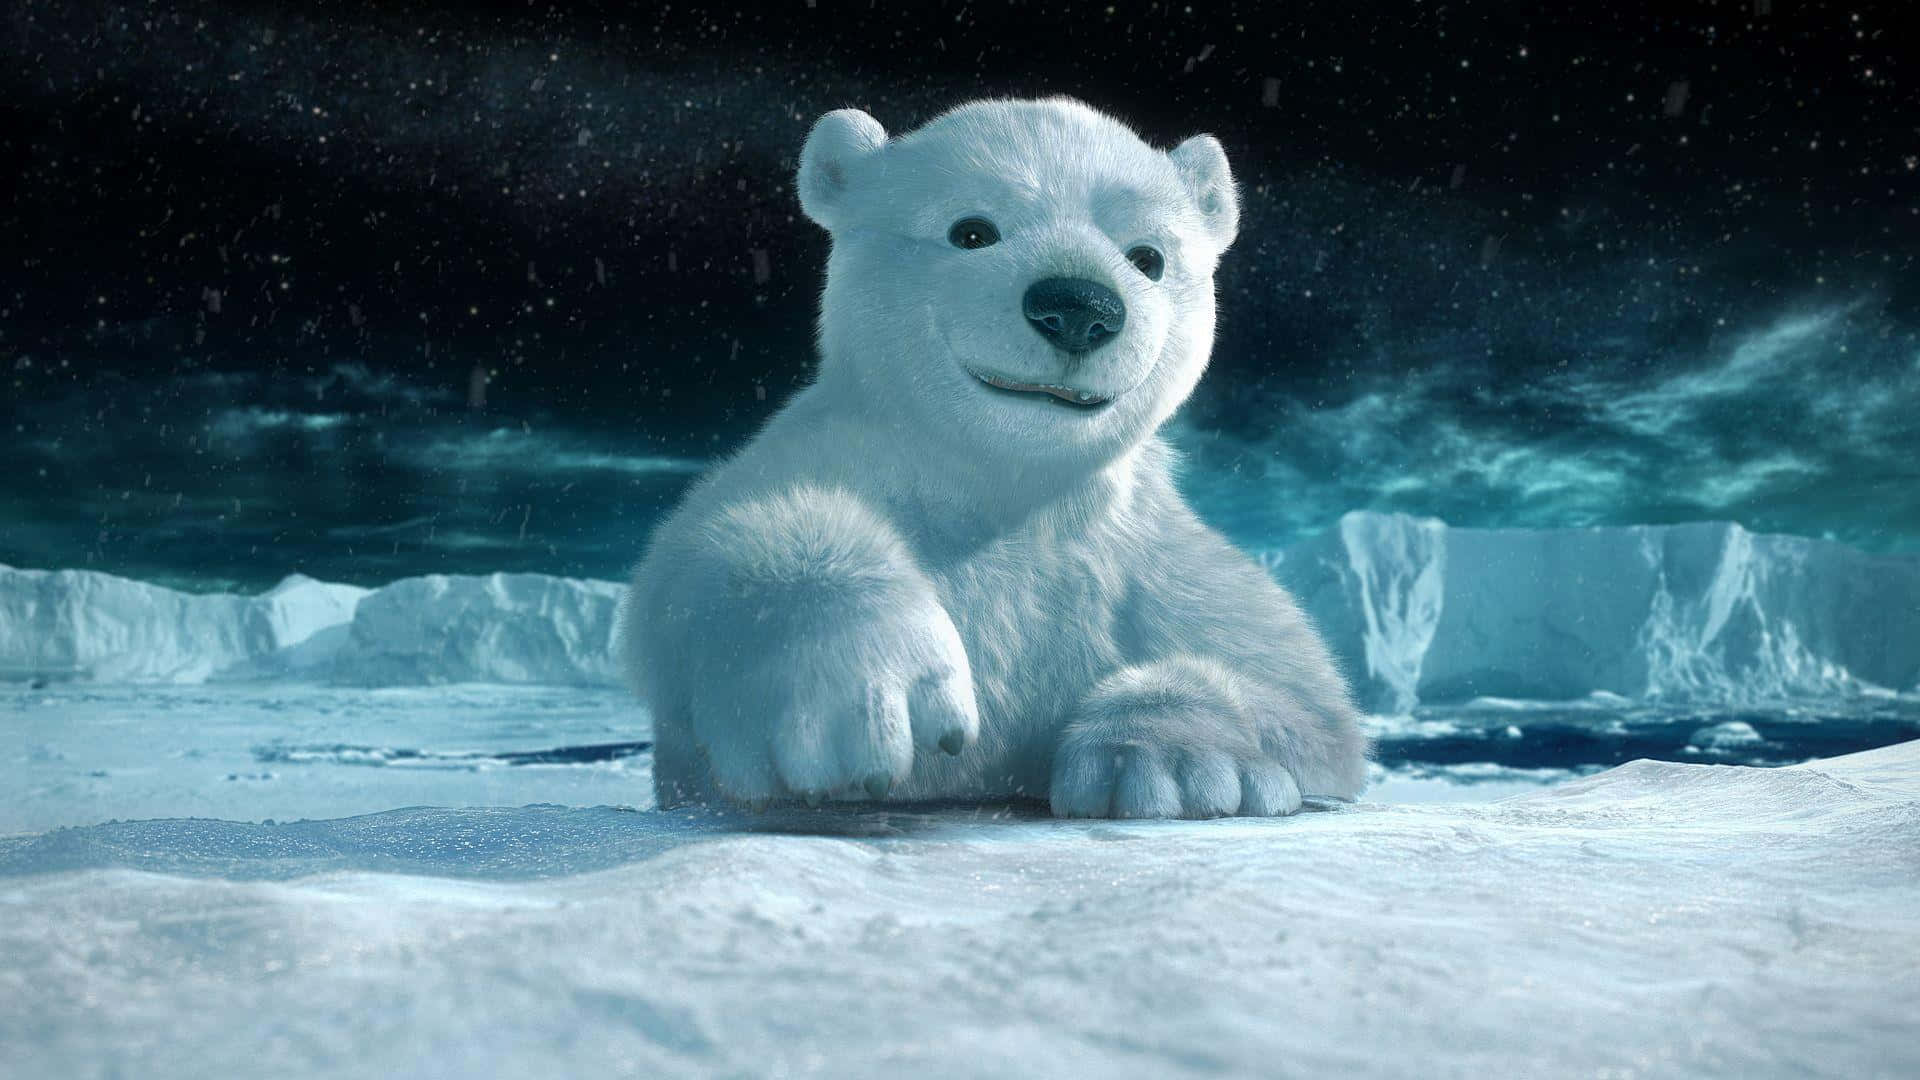 A Polar Bear in Search of Food